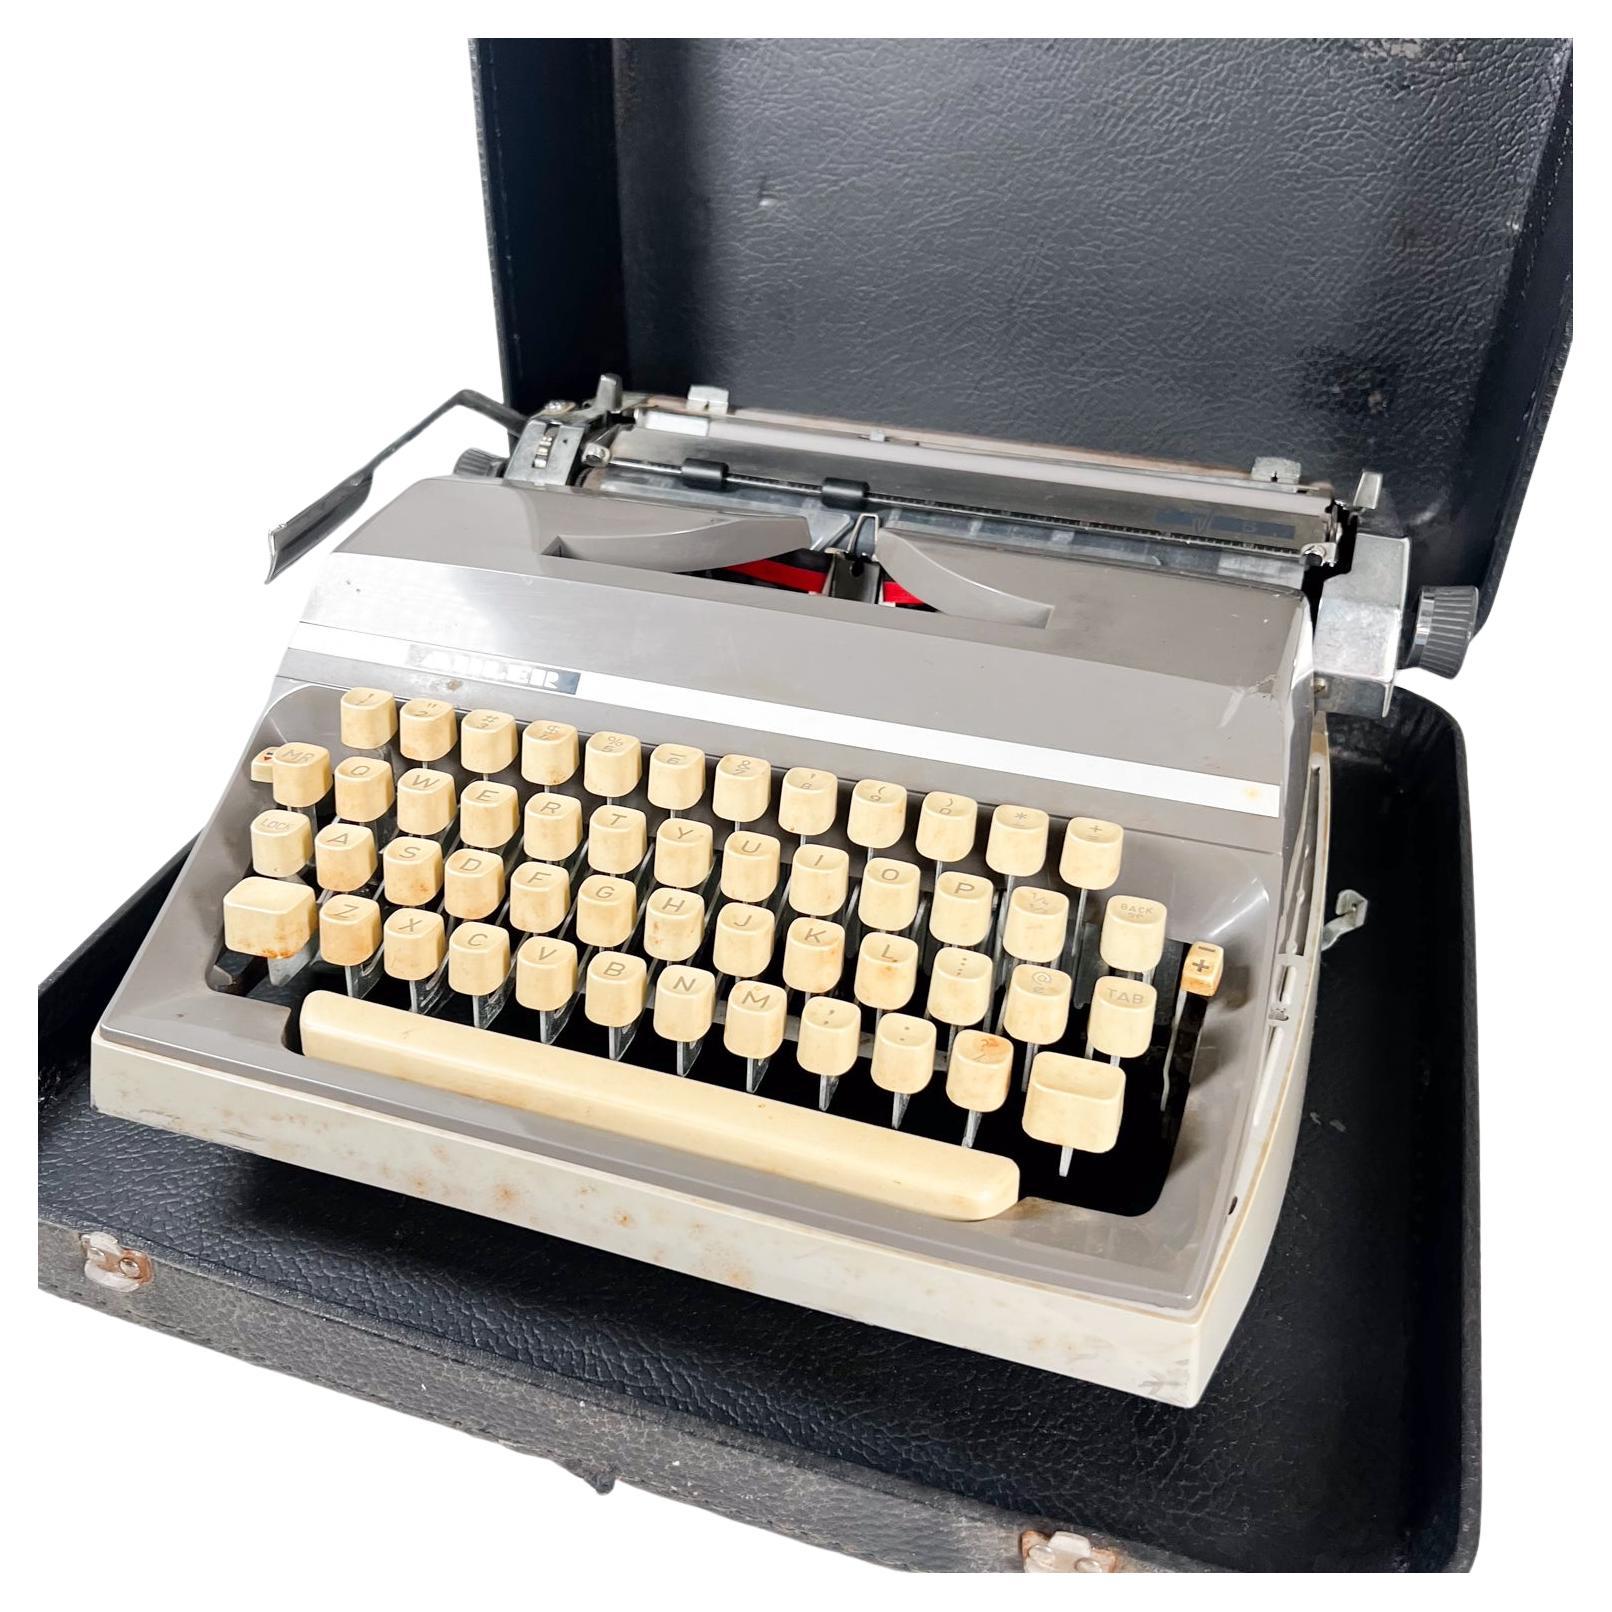 1968 Adler J5 Manual Typewriter with Case West Germany